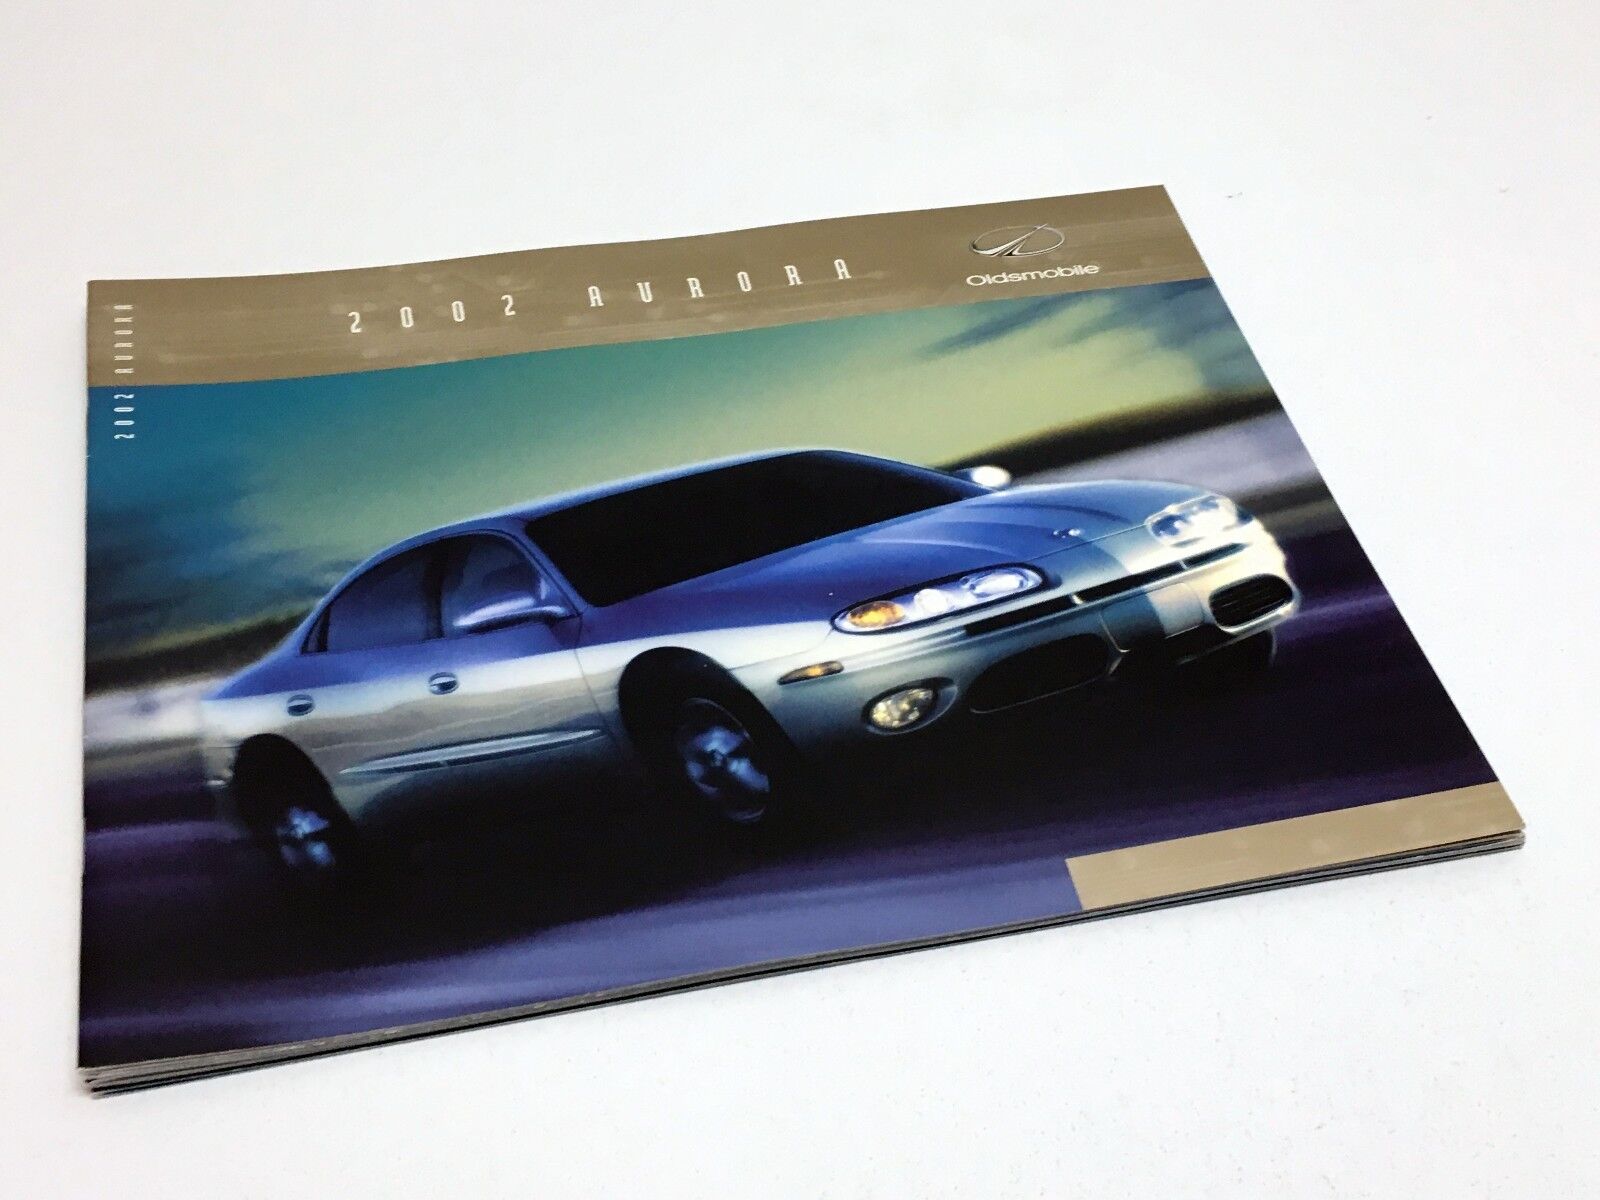 2002 Oldsmobile Aurora Brochure | eBay